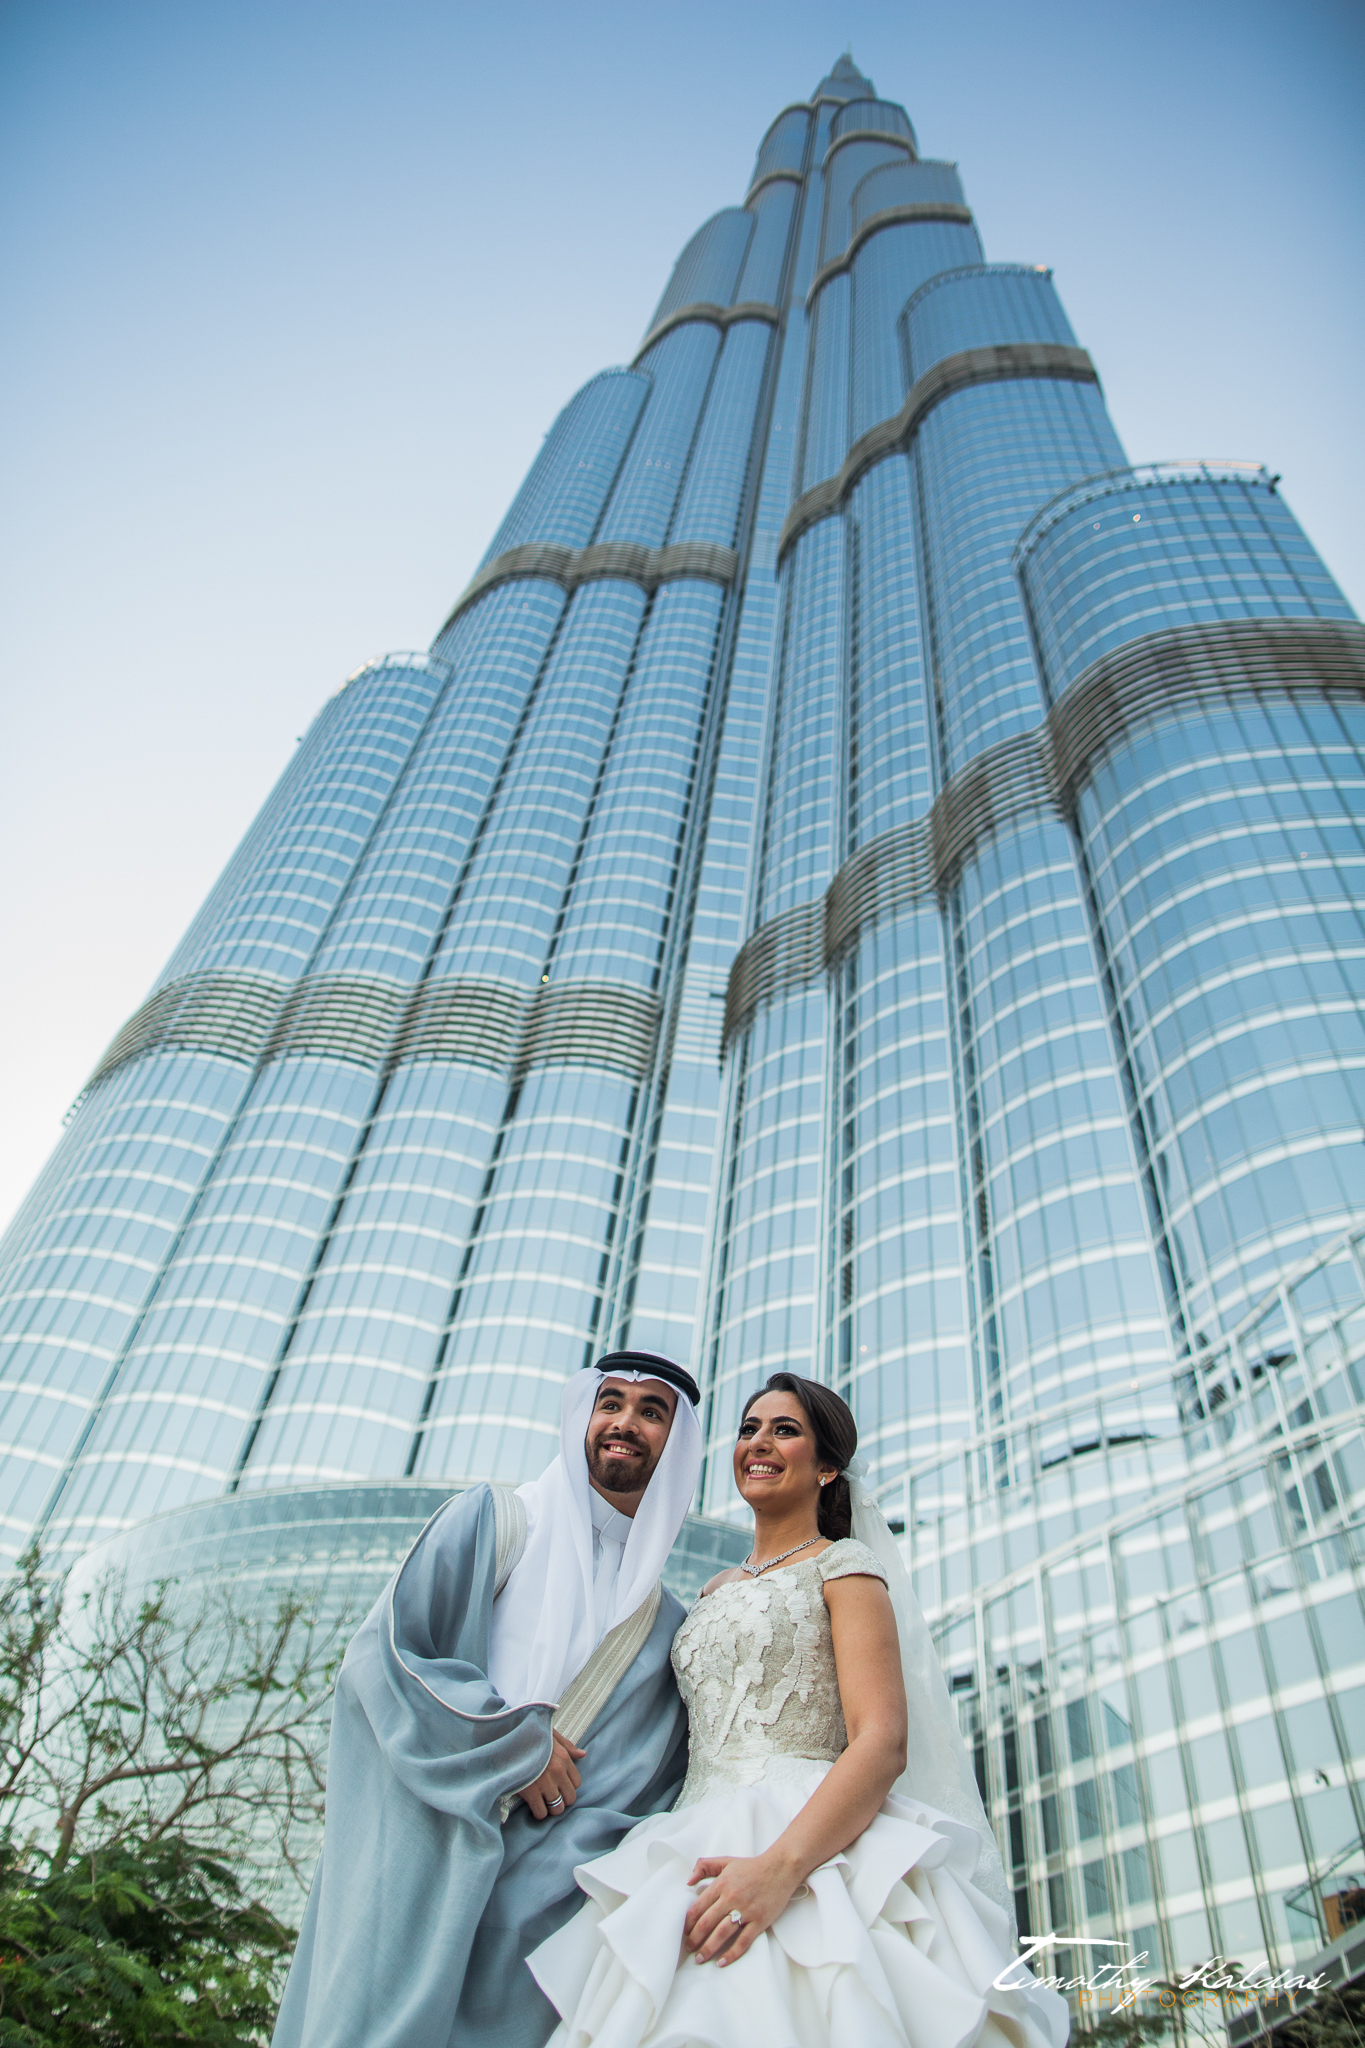 Sary And Noor Wed At The Armani Hotel In Dubai S Burj Khalifa Timothy E Kaldas Photography Timothy E Kaldas Photography